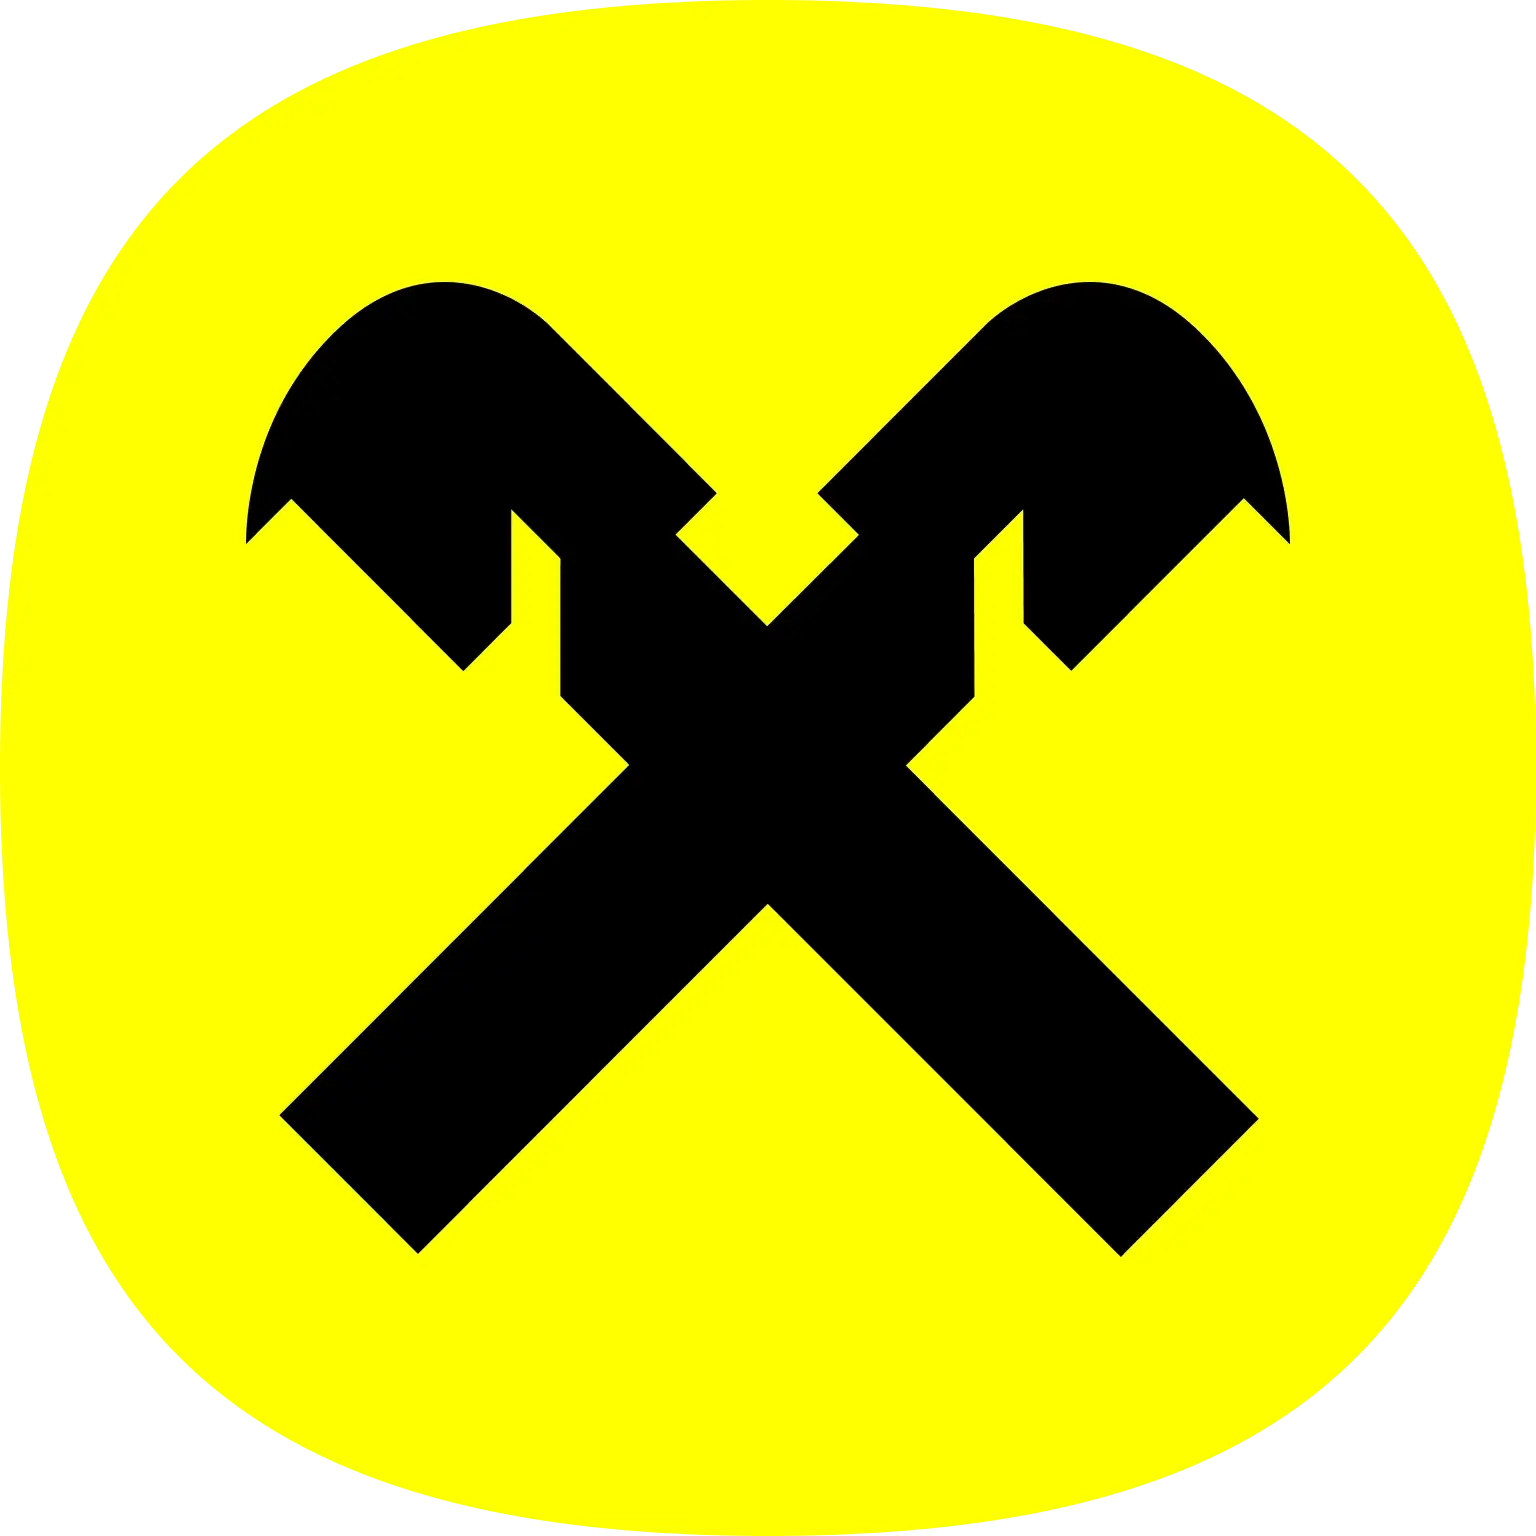 logo Raiffeisenbank